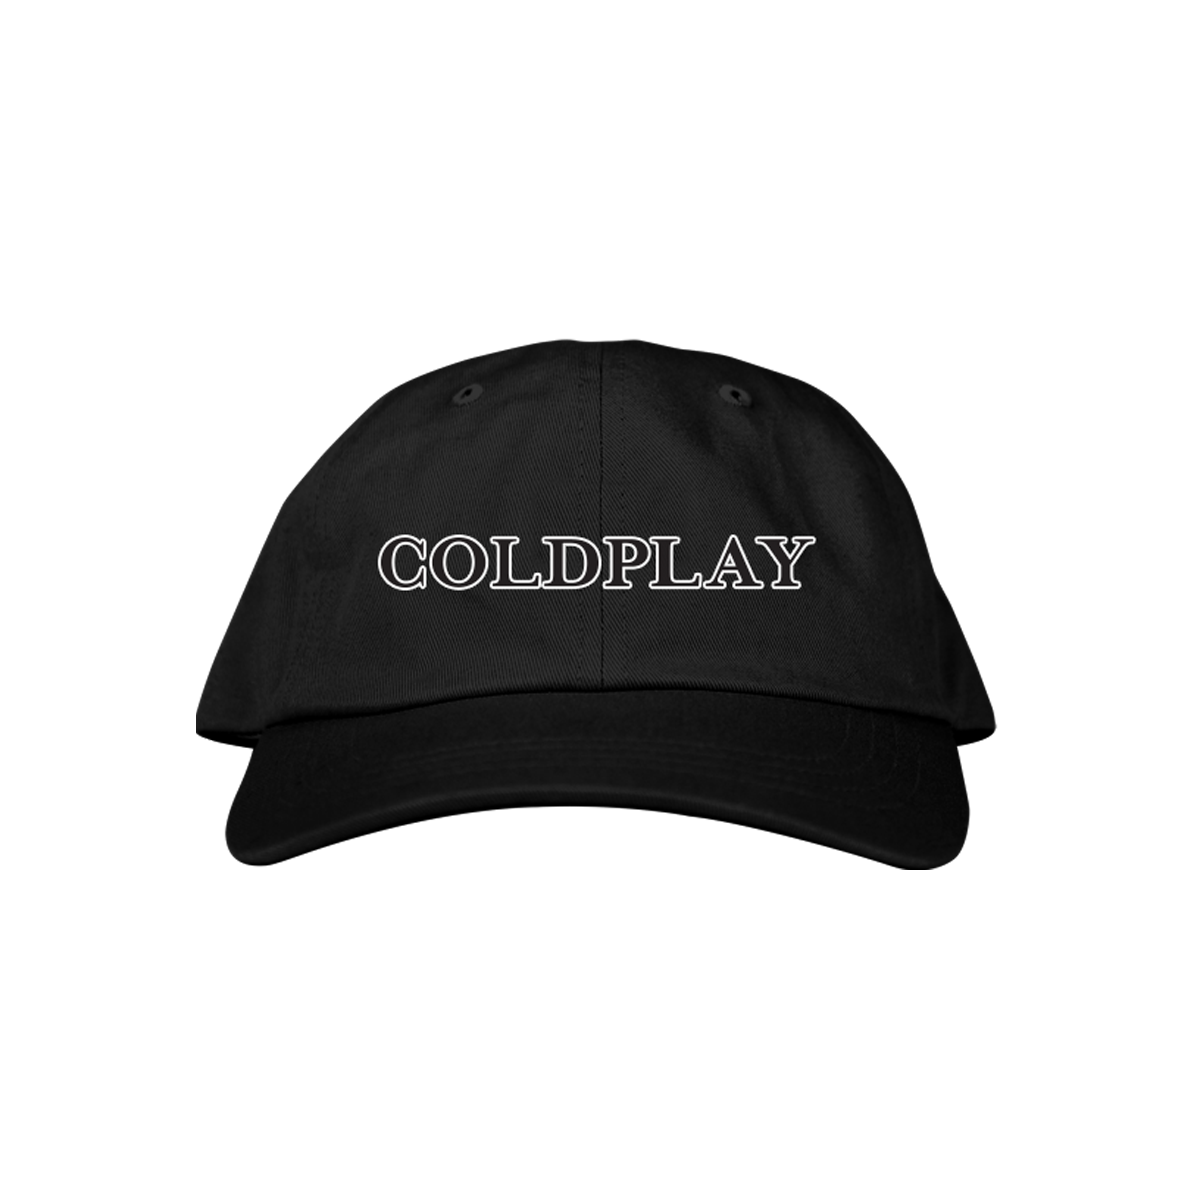 COLDPLAY LOGO HAT-Coldplay